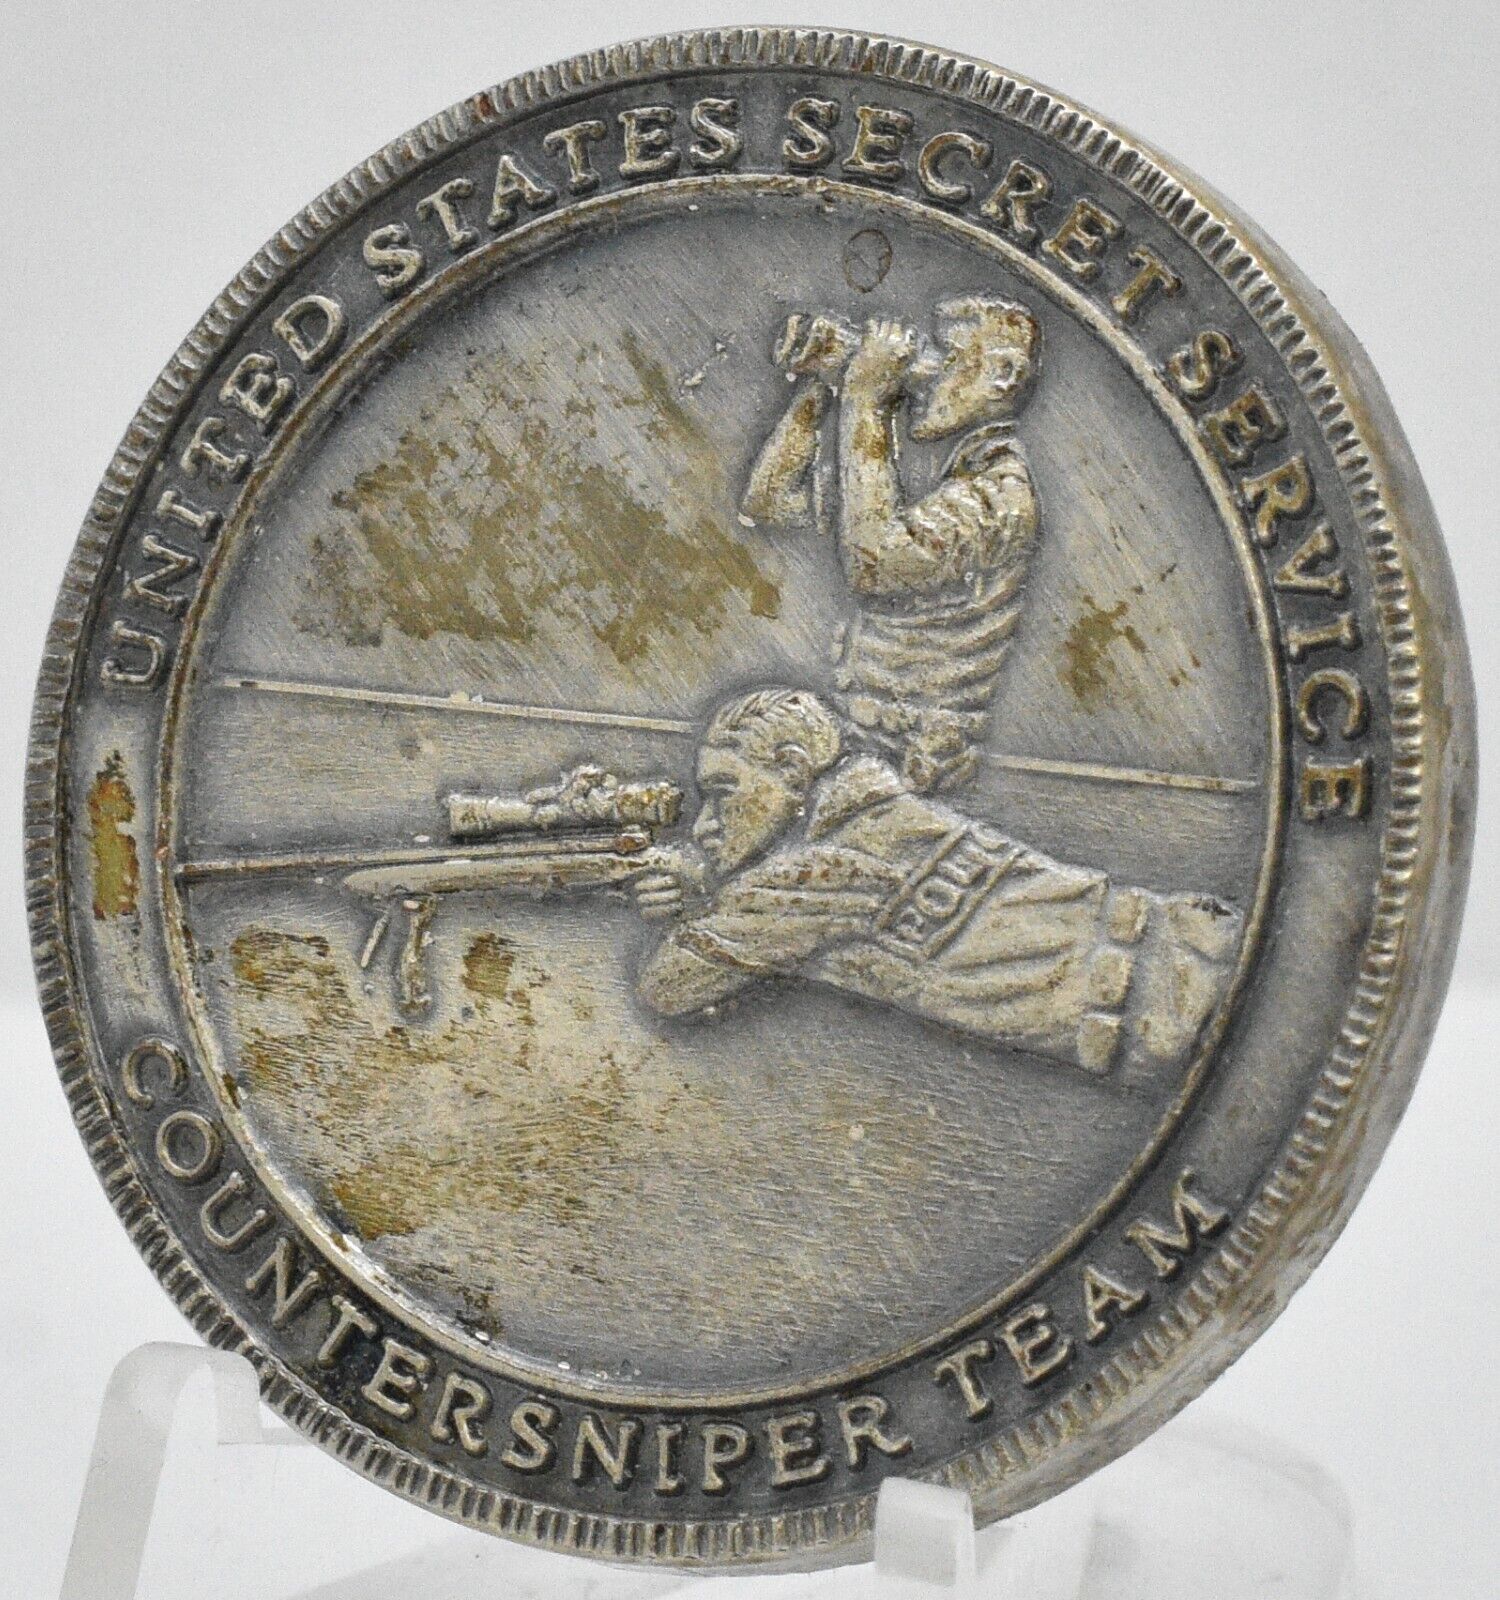 Secret Service Counter Sniper Team Vintage Silver Version Challenge Coin